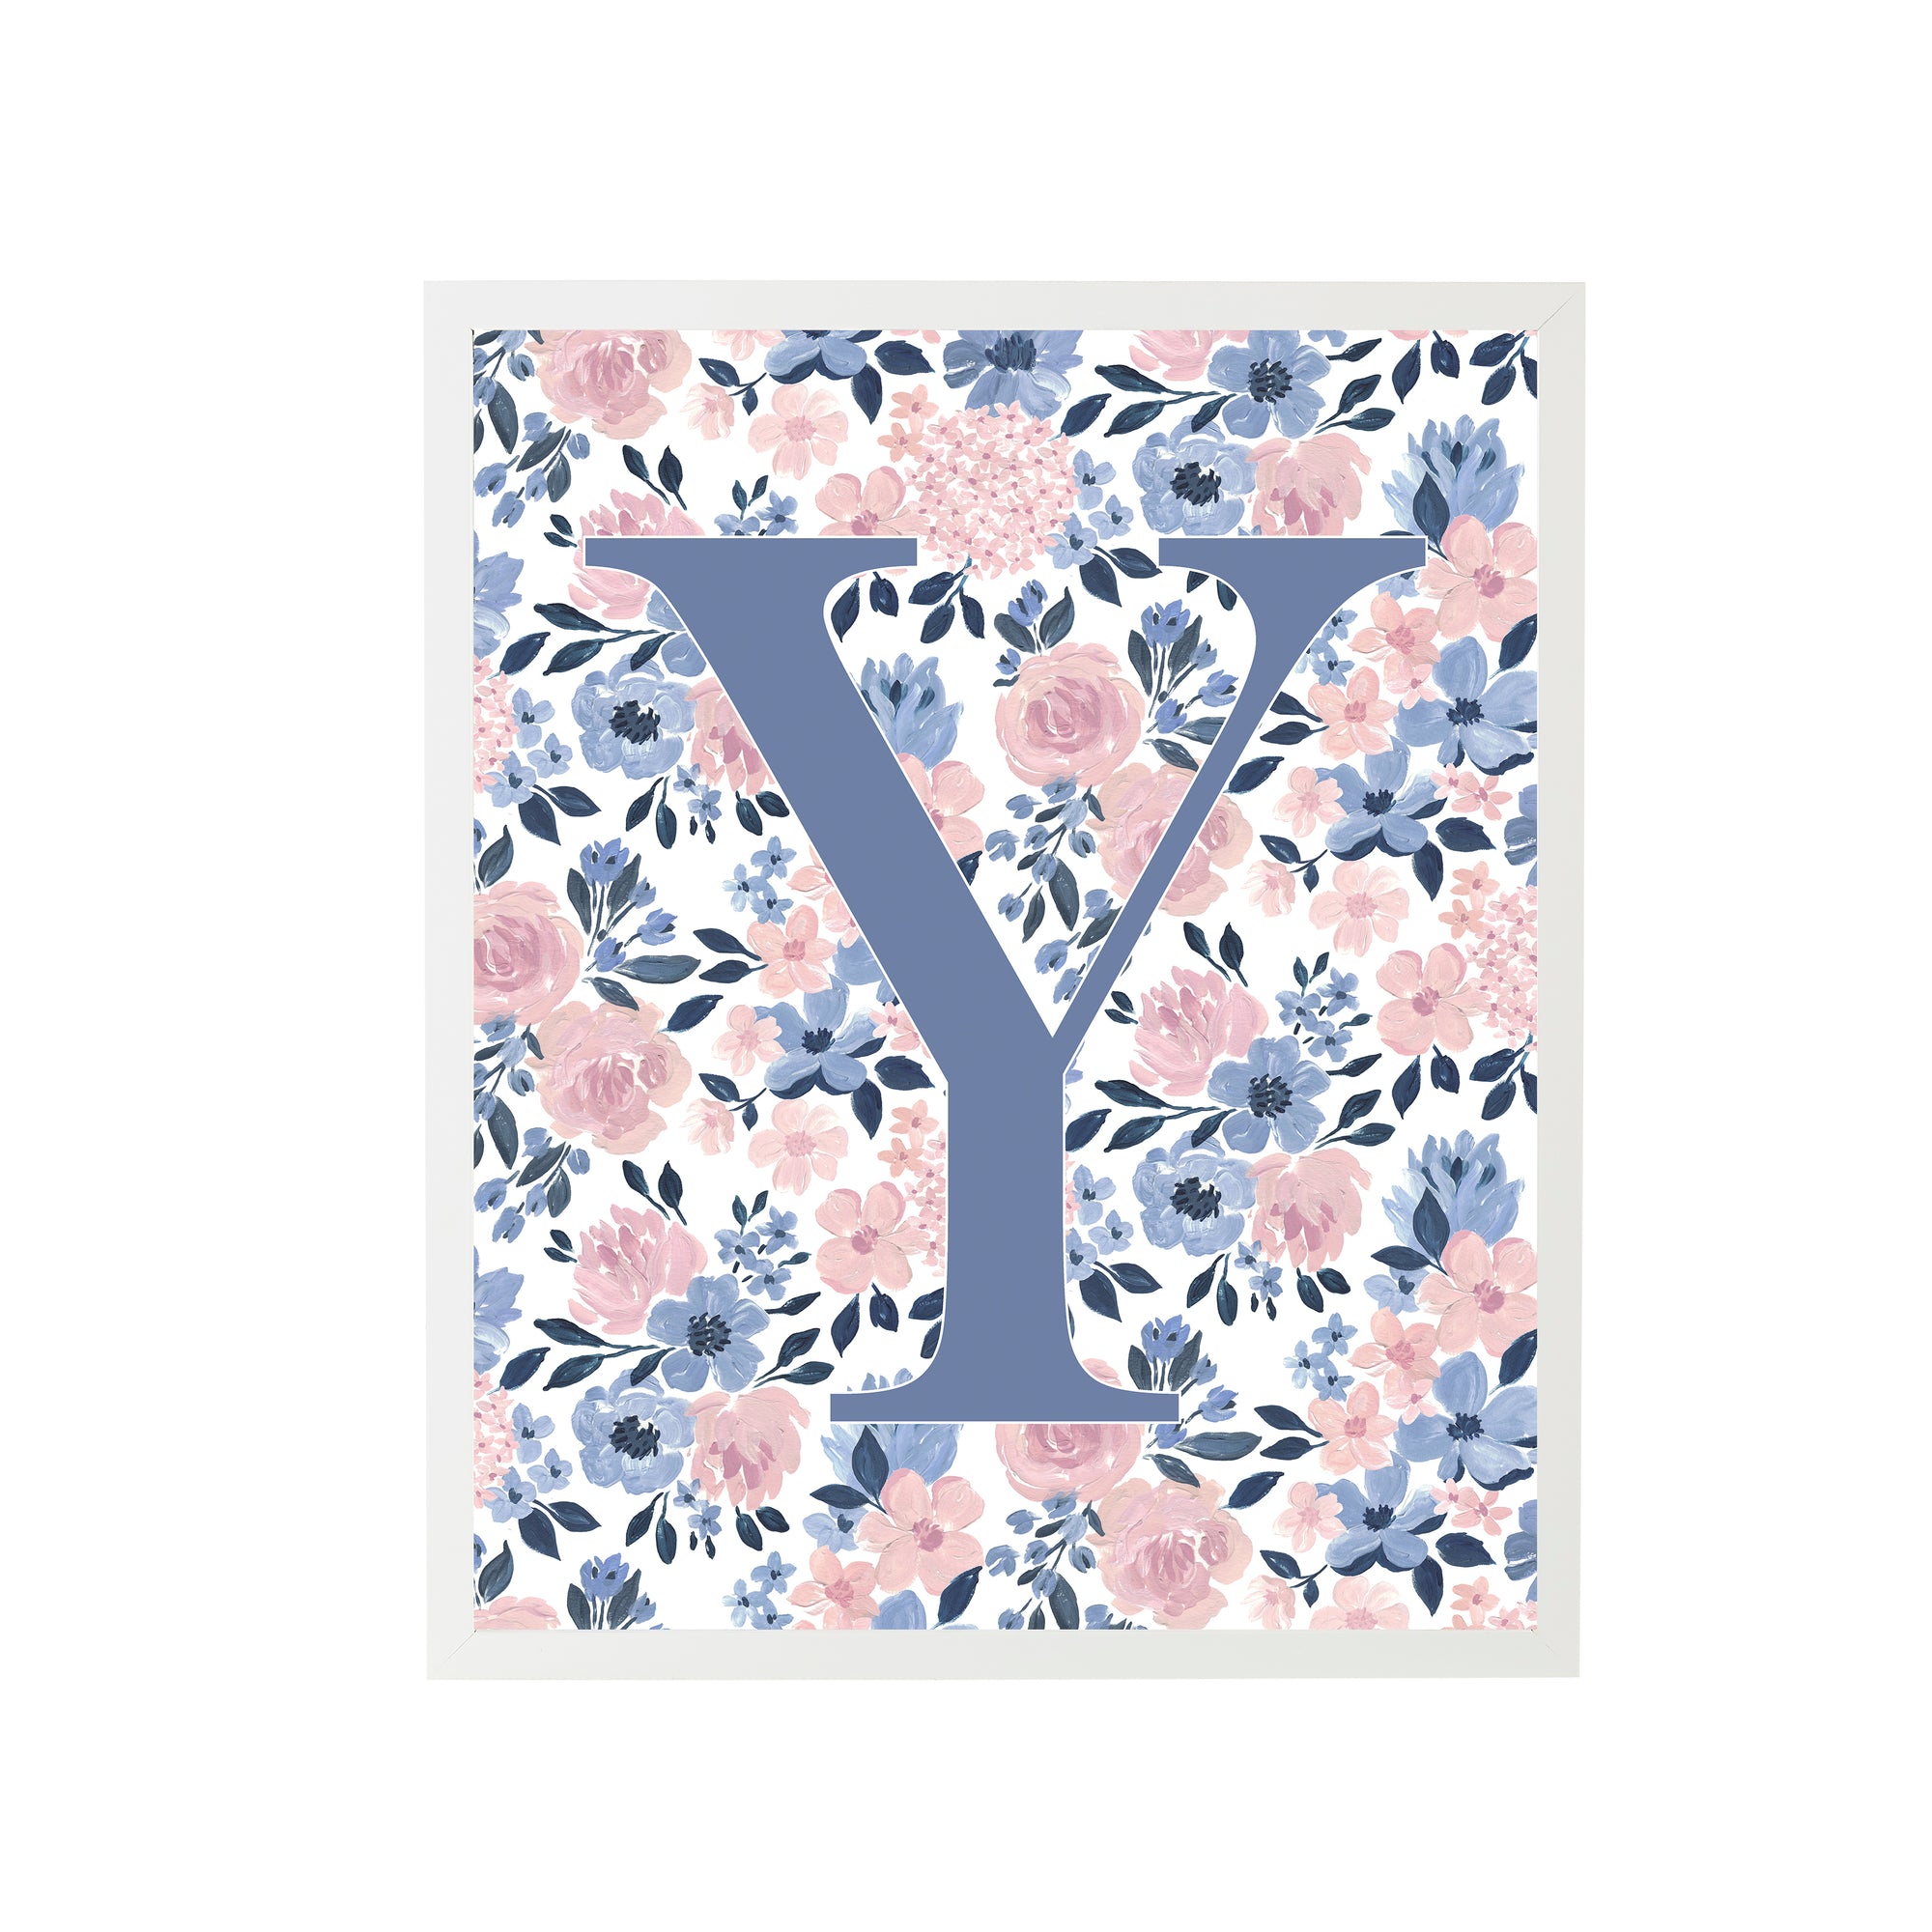 Ava Rose Letter Print "Y"